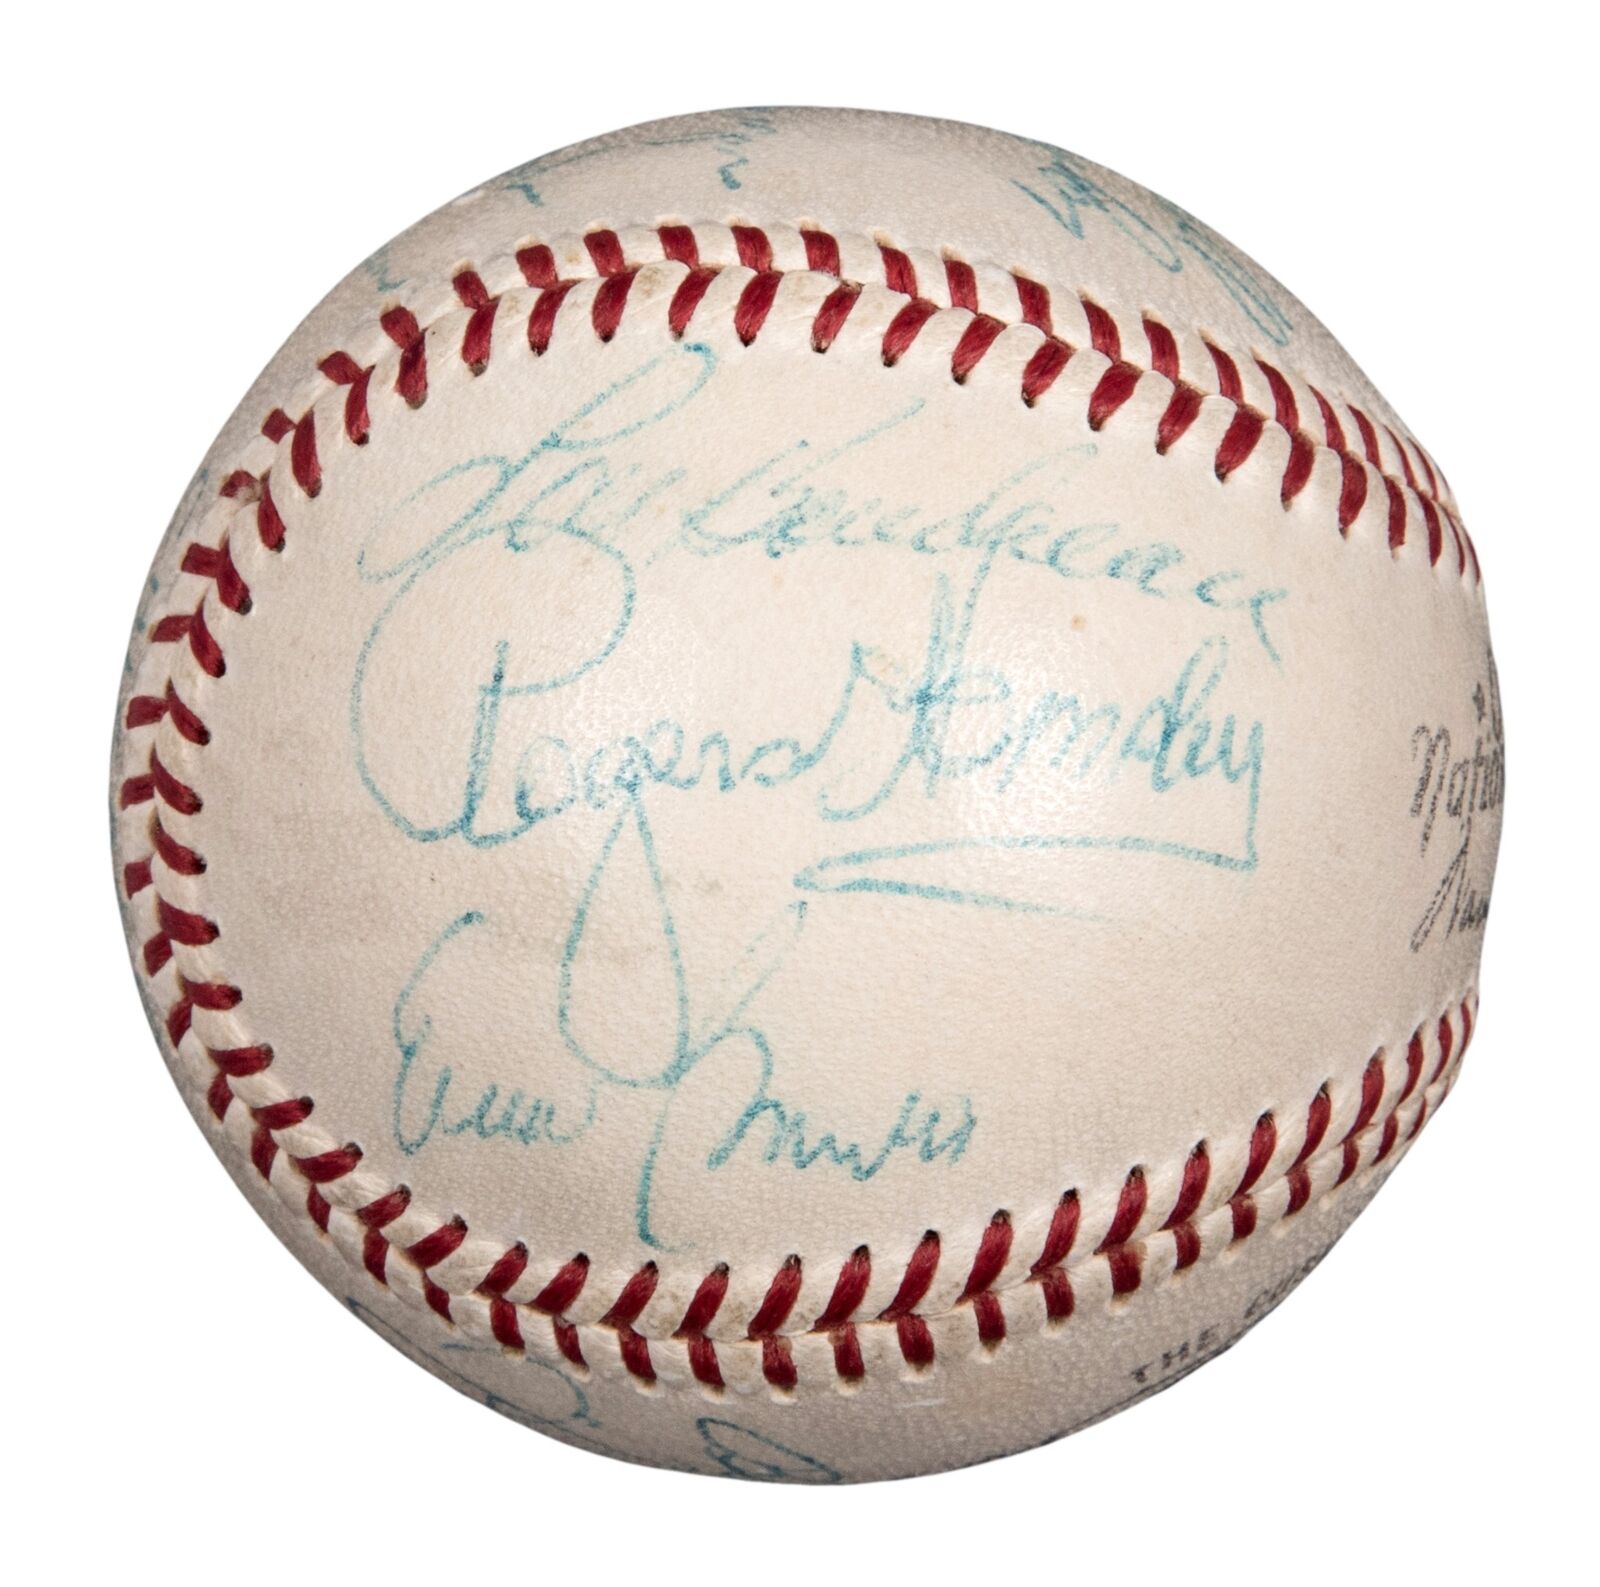 1959 Chicago Cubs Team Signed NL Baseball Rogers Hornsby & Ernie Banks JSA COA